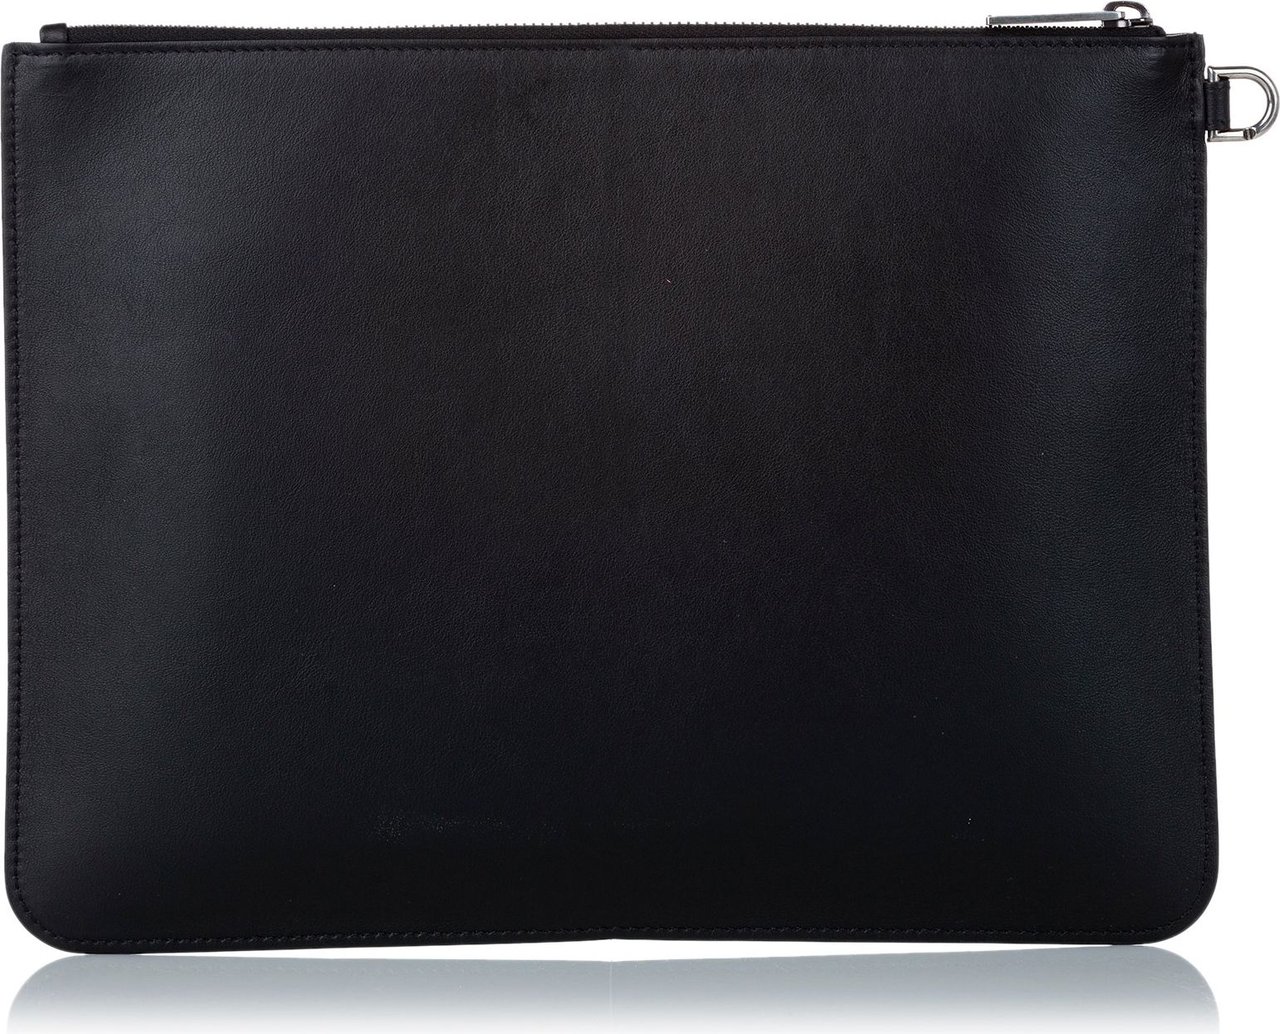 Givenchy Logo Leather Clutch Bag Zwart